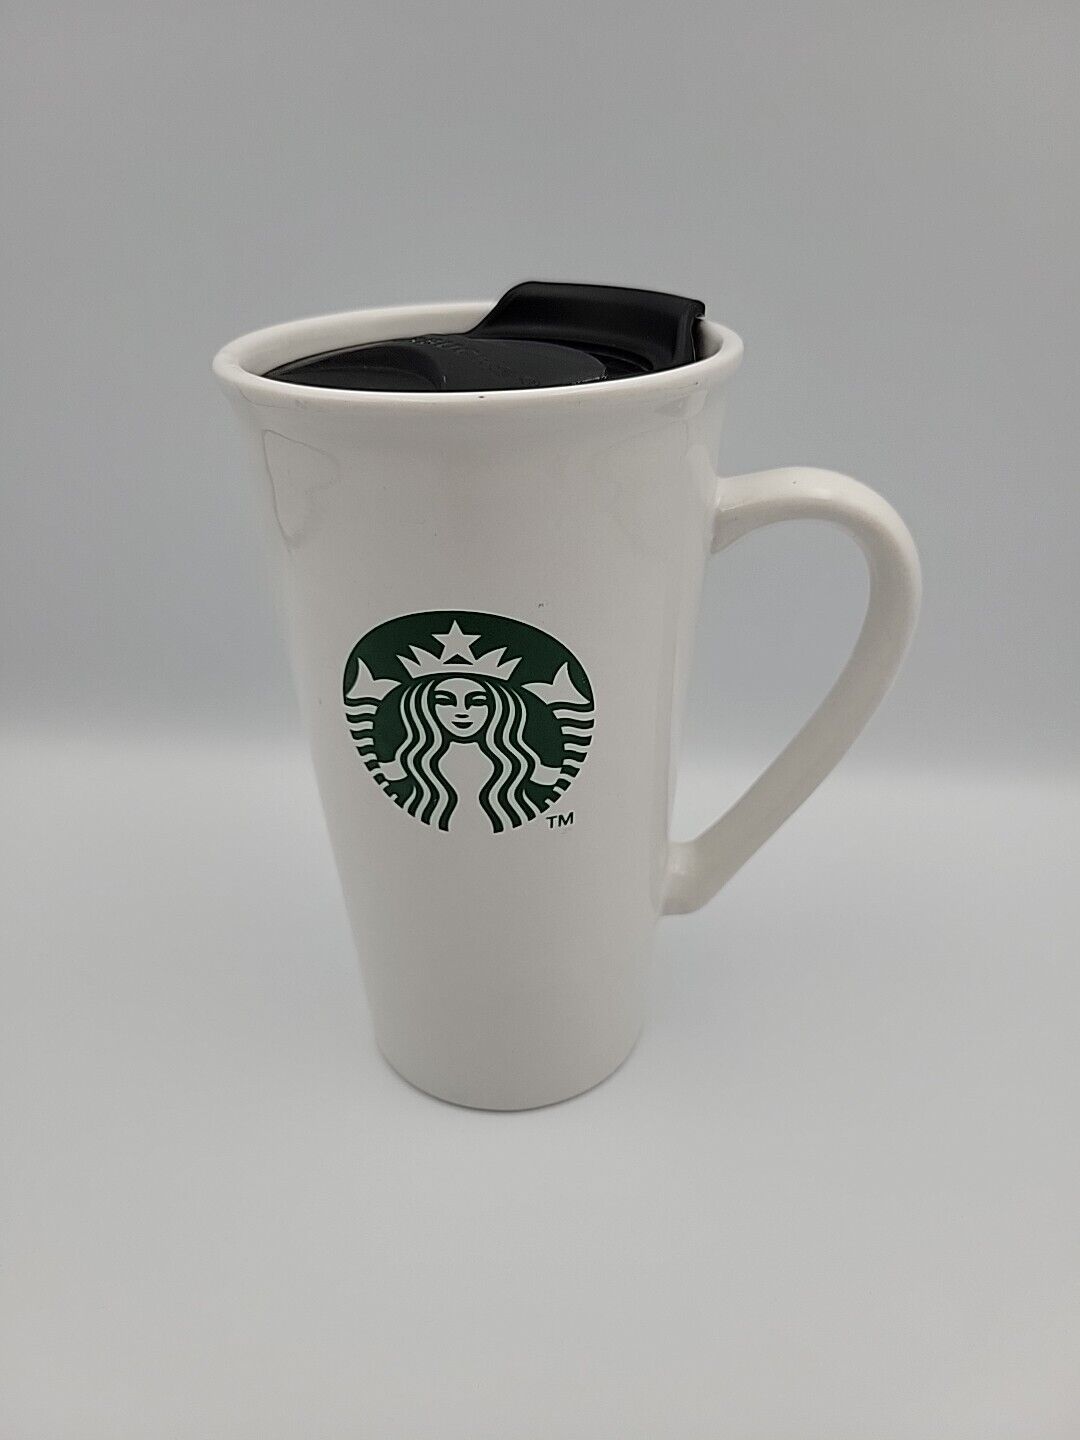 Starbucks Ceramic Travel Mug Handle 2015 Green Mermaid Logo Black Lid 14.3oz